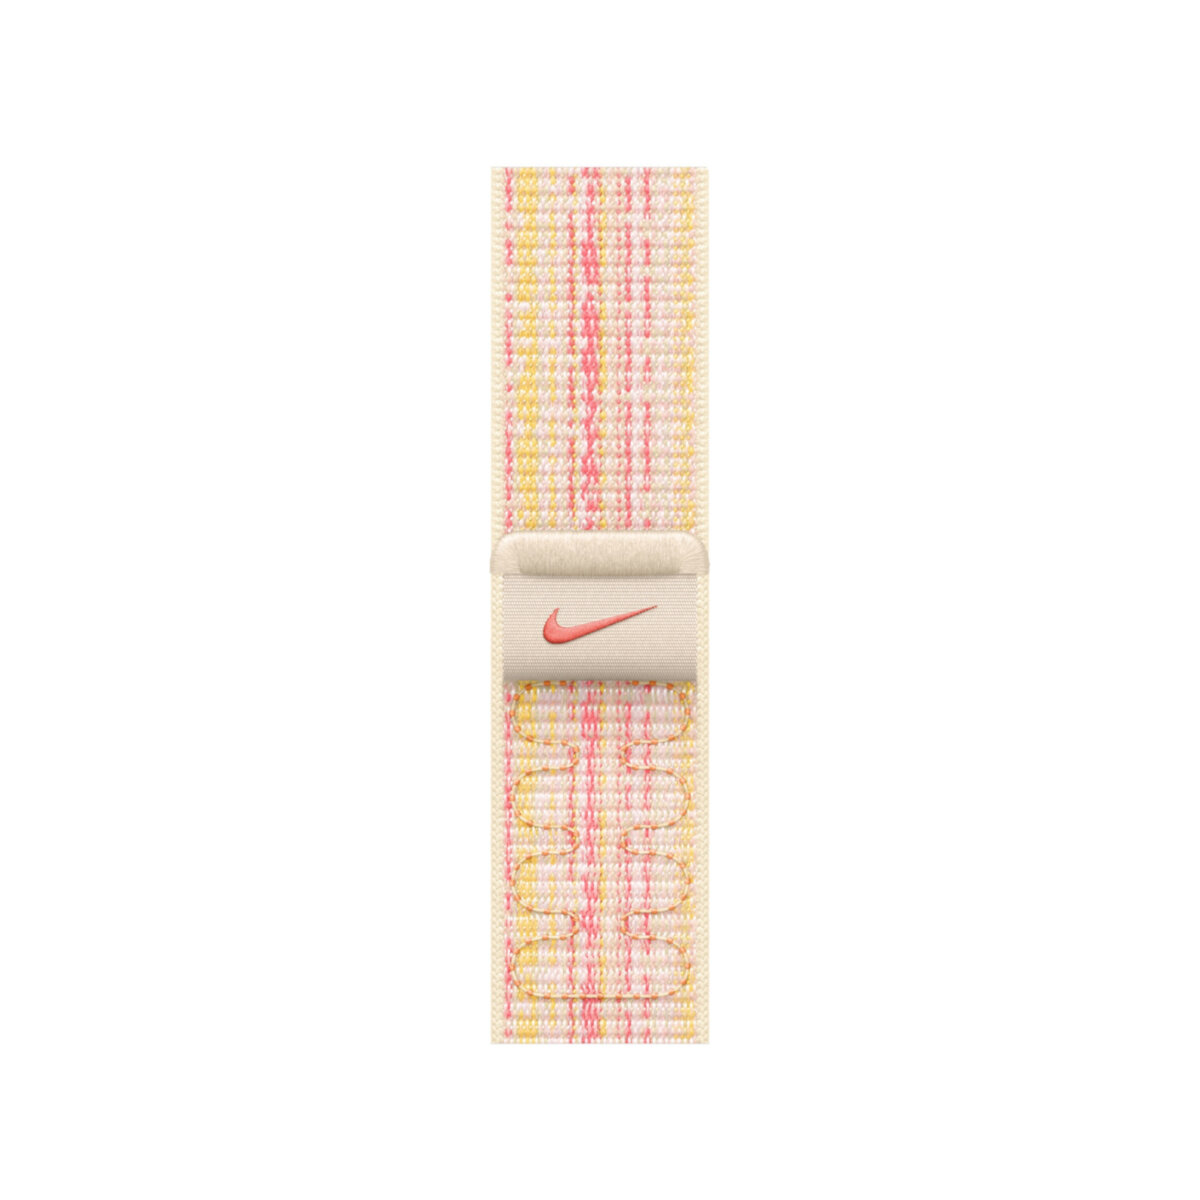 Pasek Nike Apple MUJW3ZM/A 41mm różowy, od frontu widok na pasek z logo